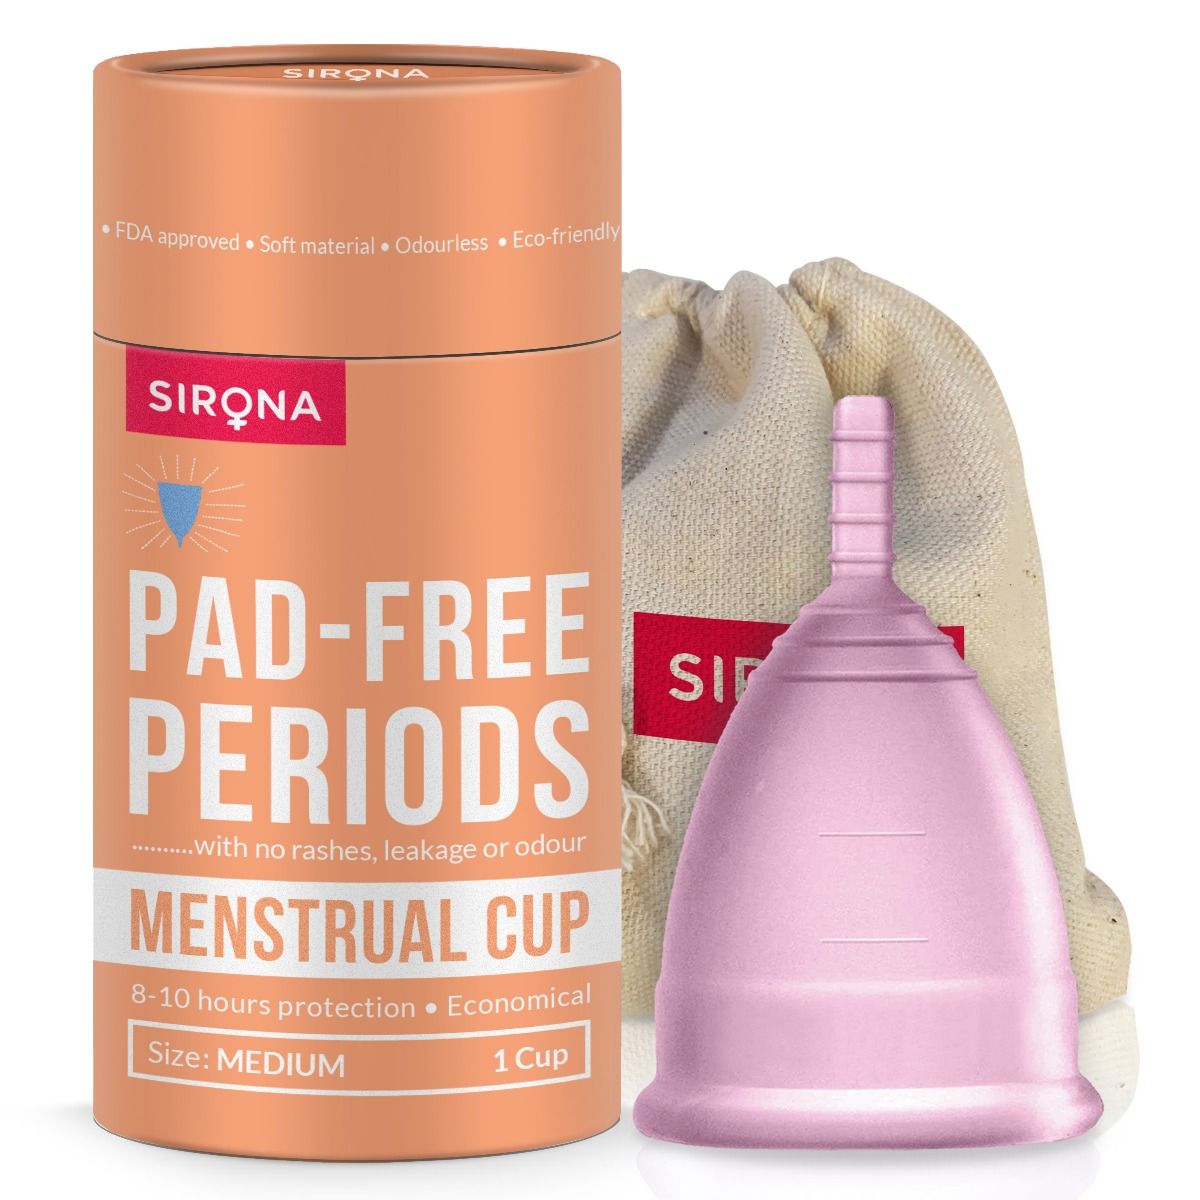 Buy Sirona Pad-Free Periods Menstrual Cup Medium, 1 Count Online